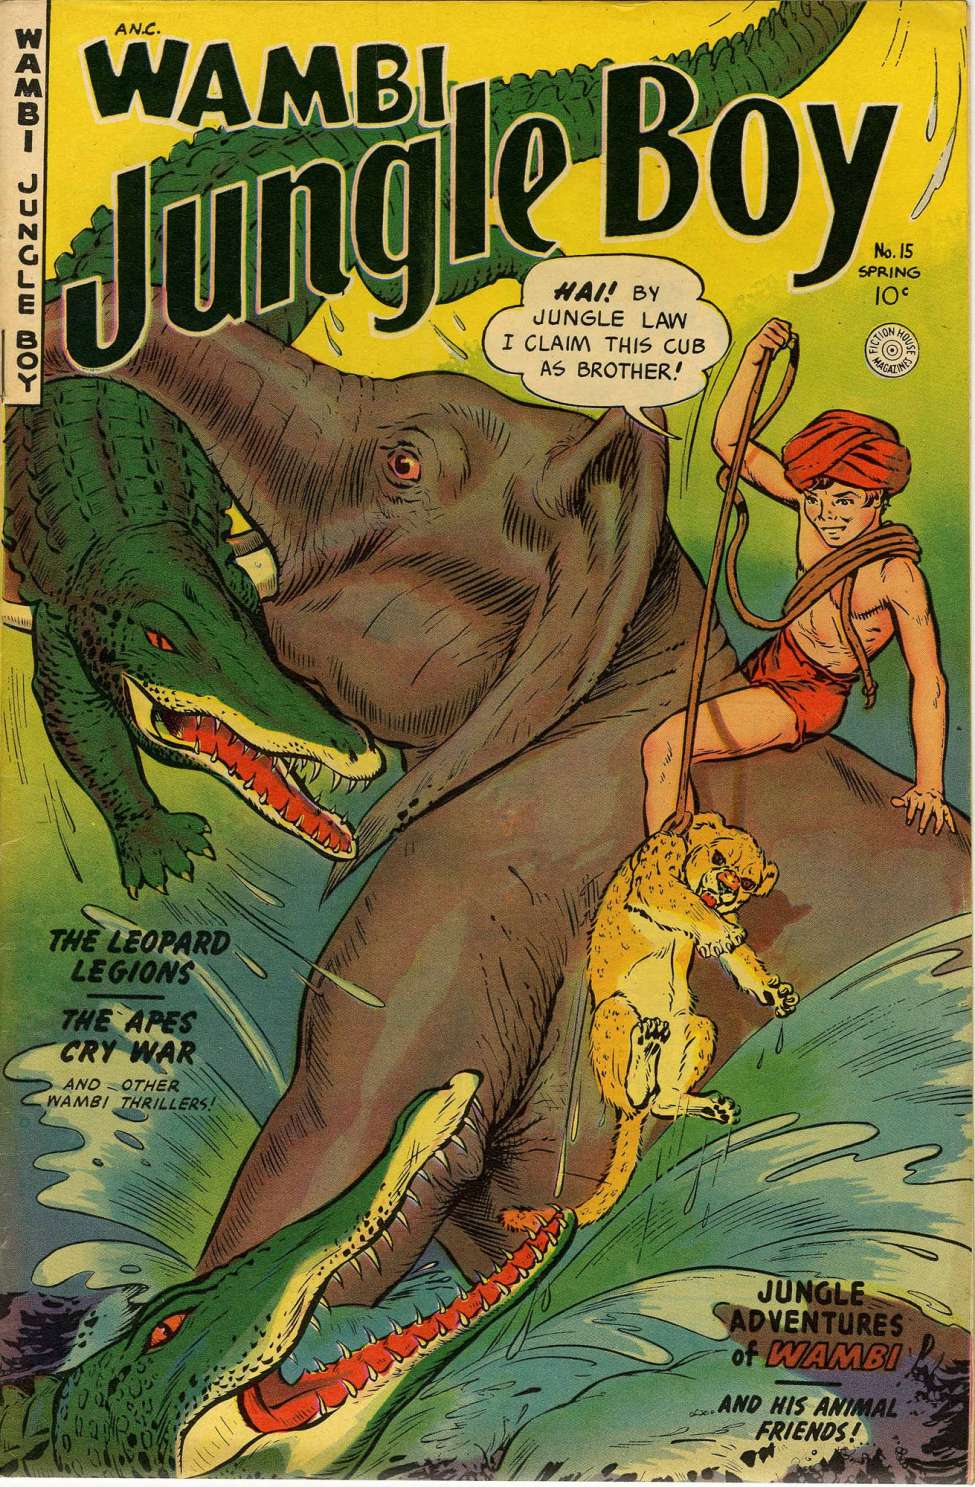 Comic Book Cover For Wambi, Jungle Boy 15 (alt) - Version 2